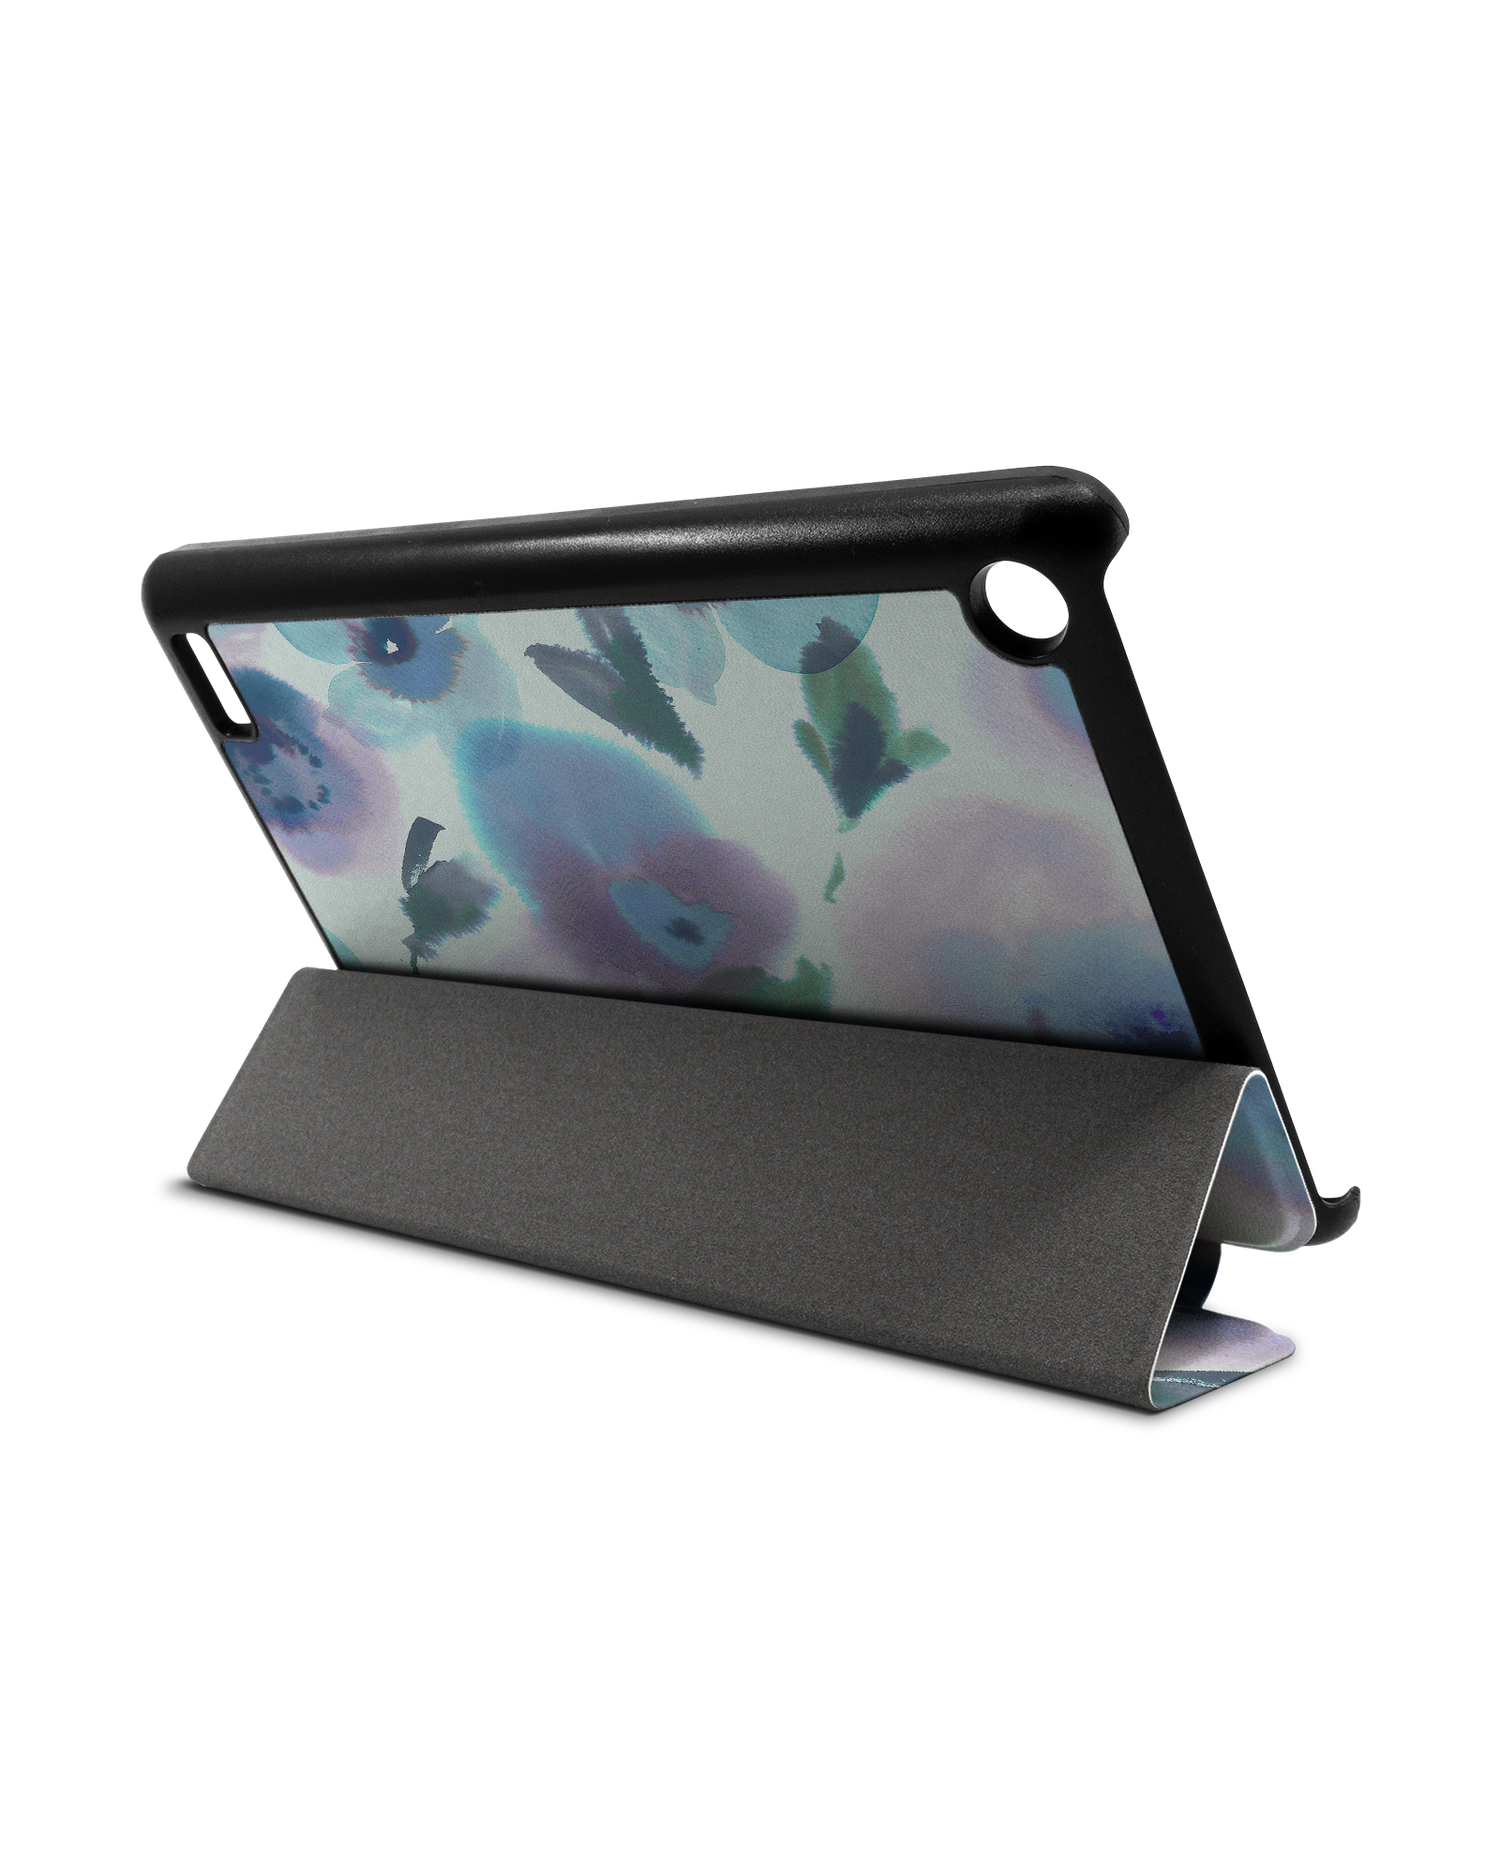 Watercolour Flowers Blue Tablet Smart Case für Amazon Fire 7: Aufgestellt im Querformat